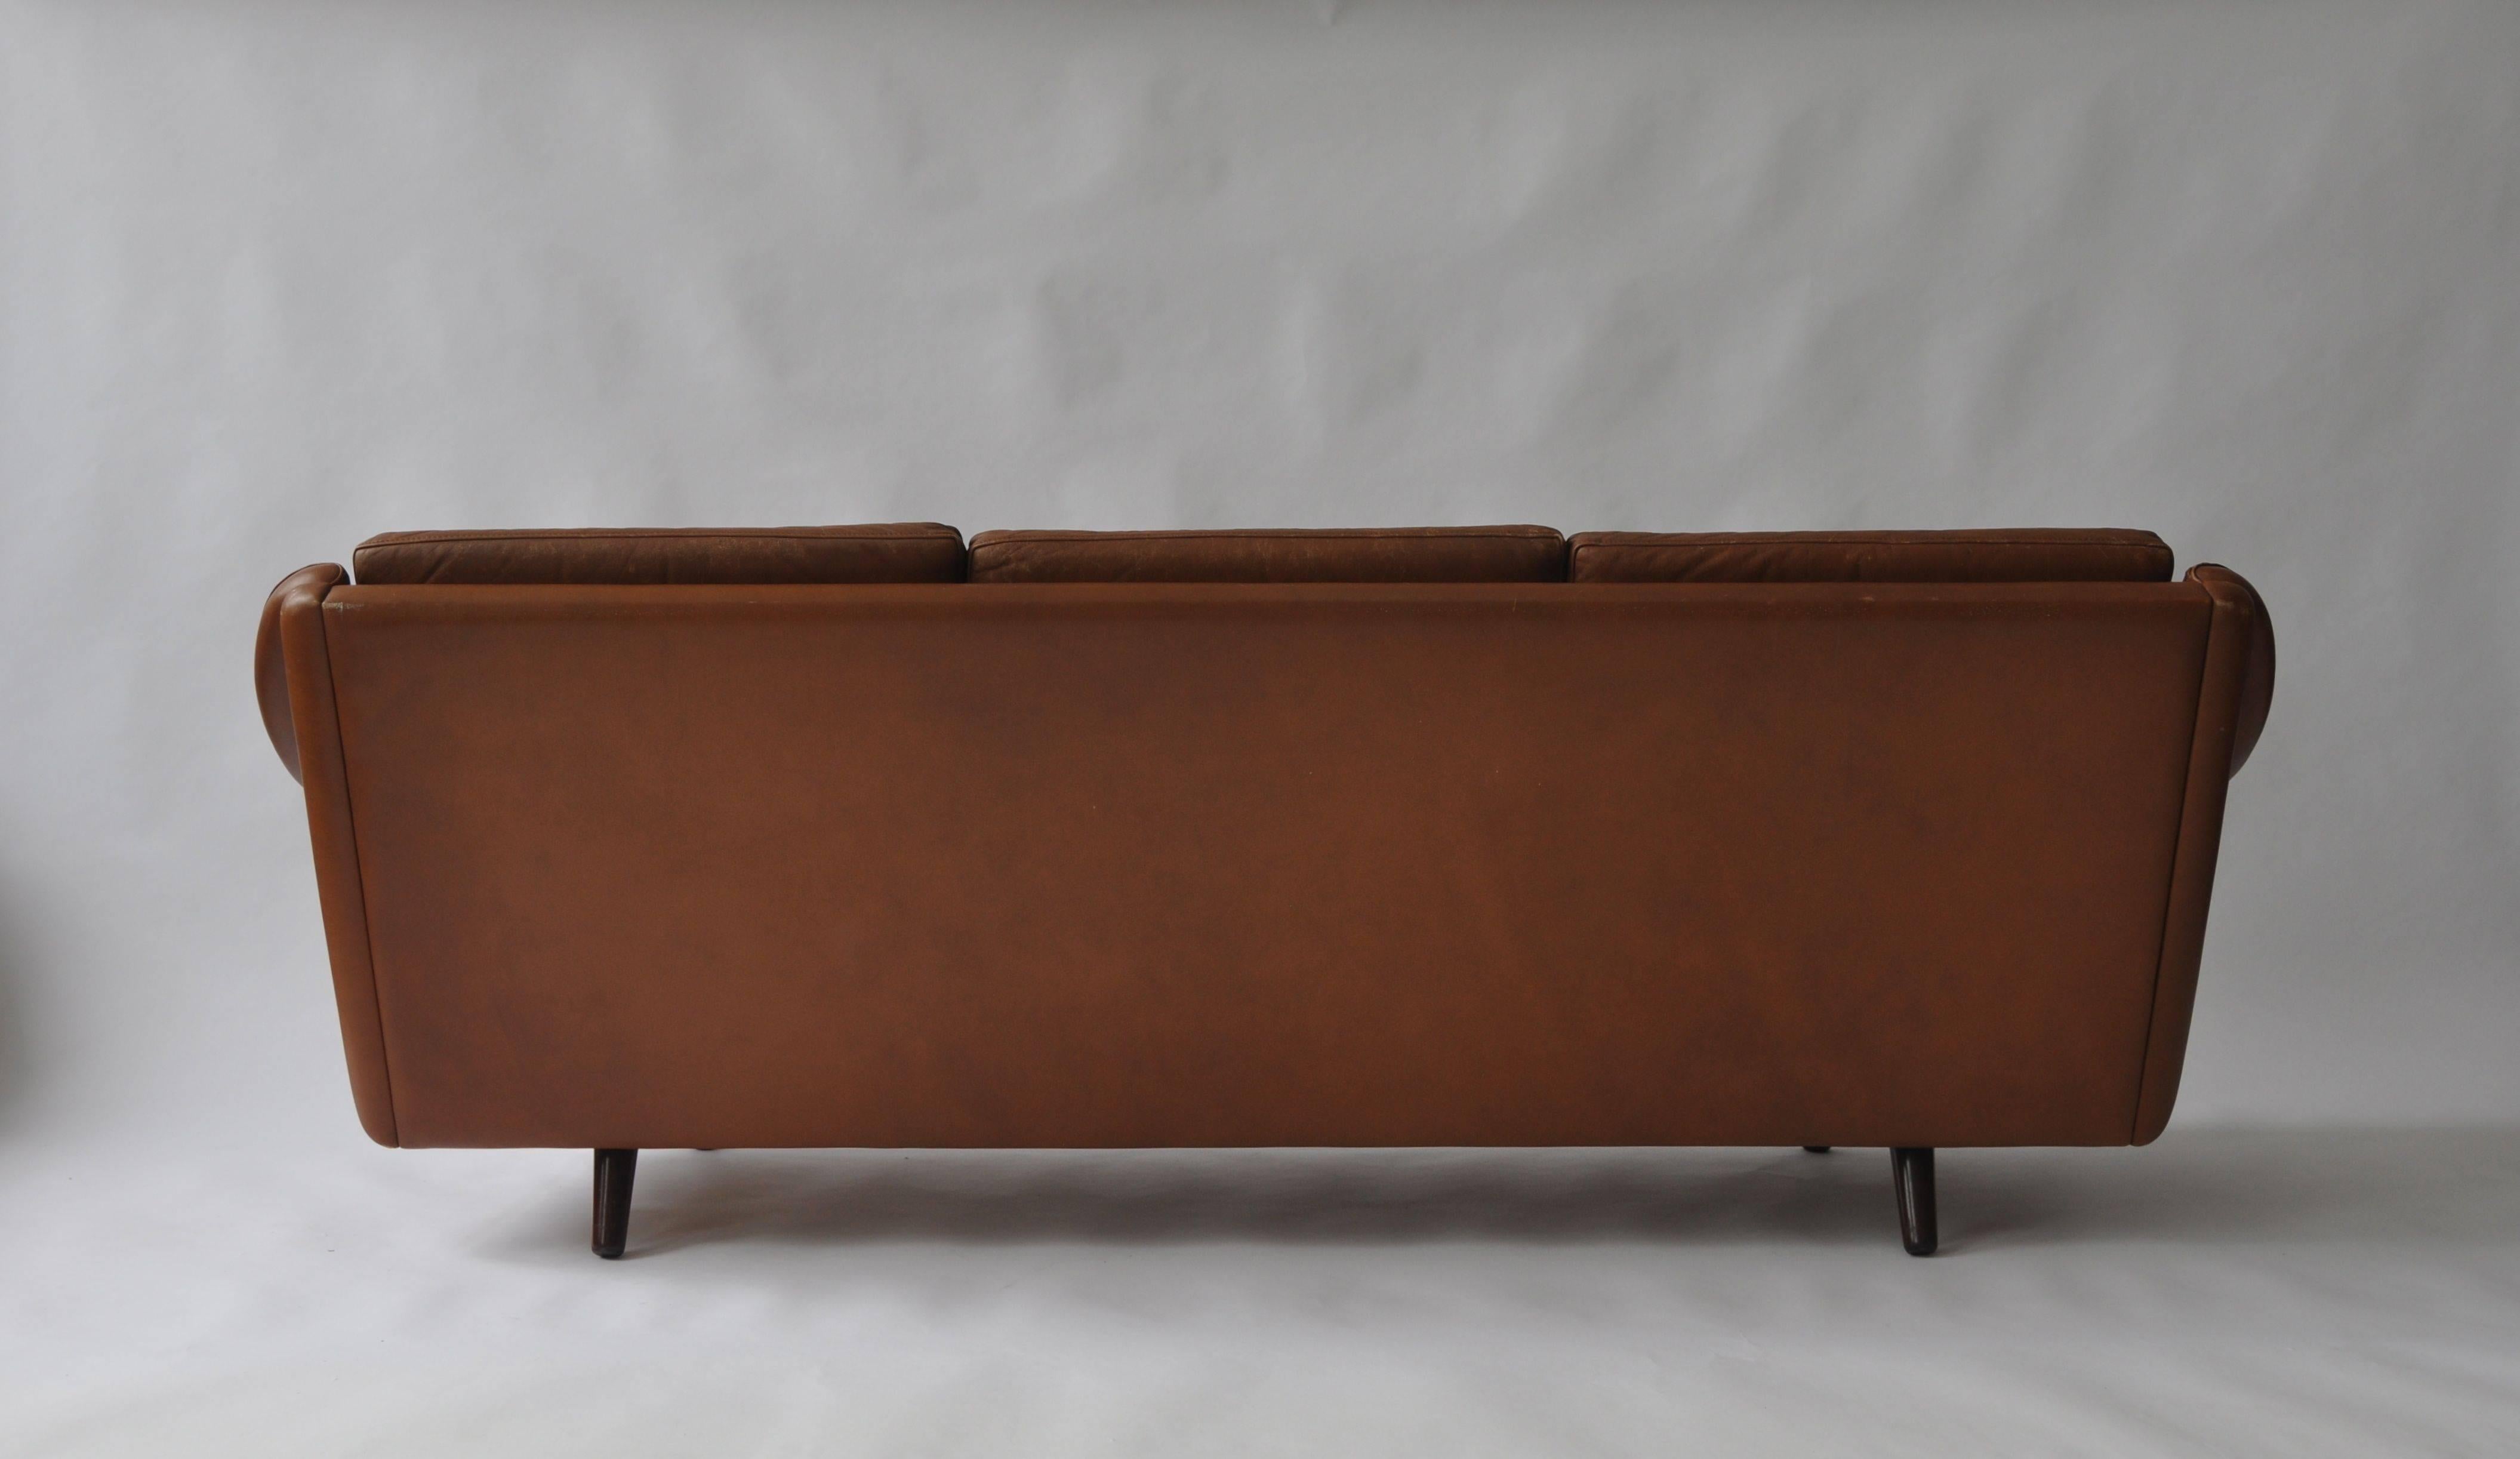 Aage Christiansen Danish Leather Sofa, 1960s (Skandinavische Moderne)